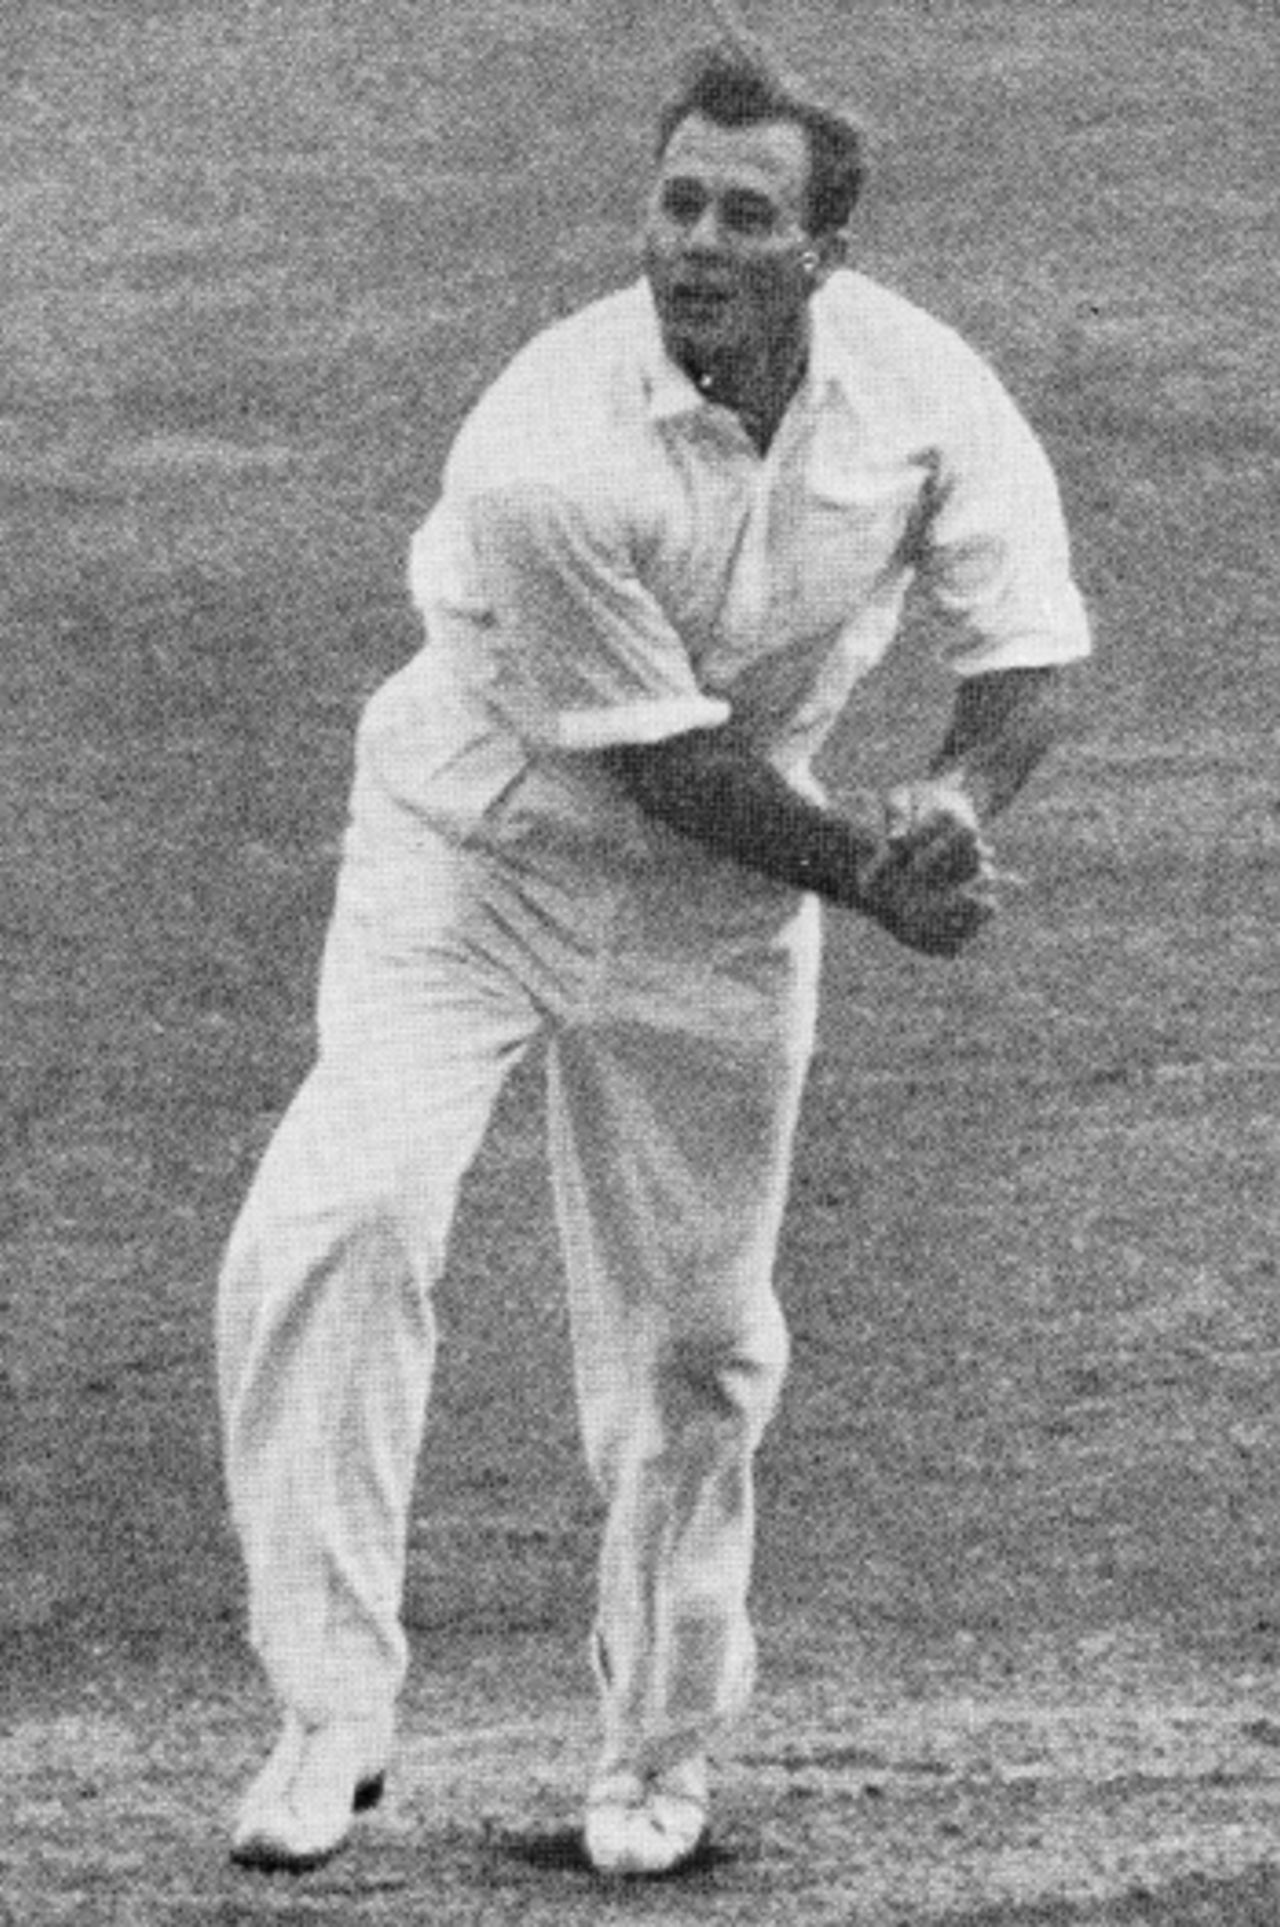 Athol Rowan bowling against England at Trent Bridge, England v South Africa, Trent Bridge, June 10, 1947